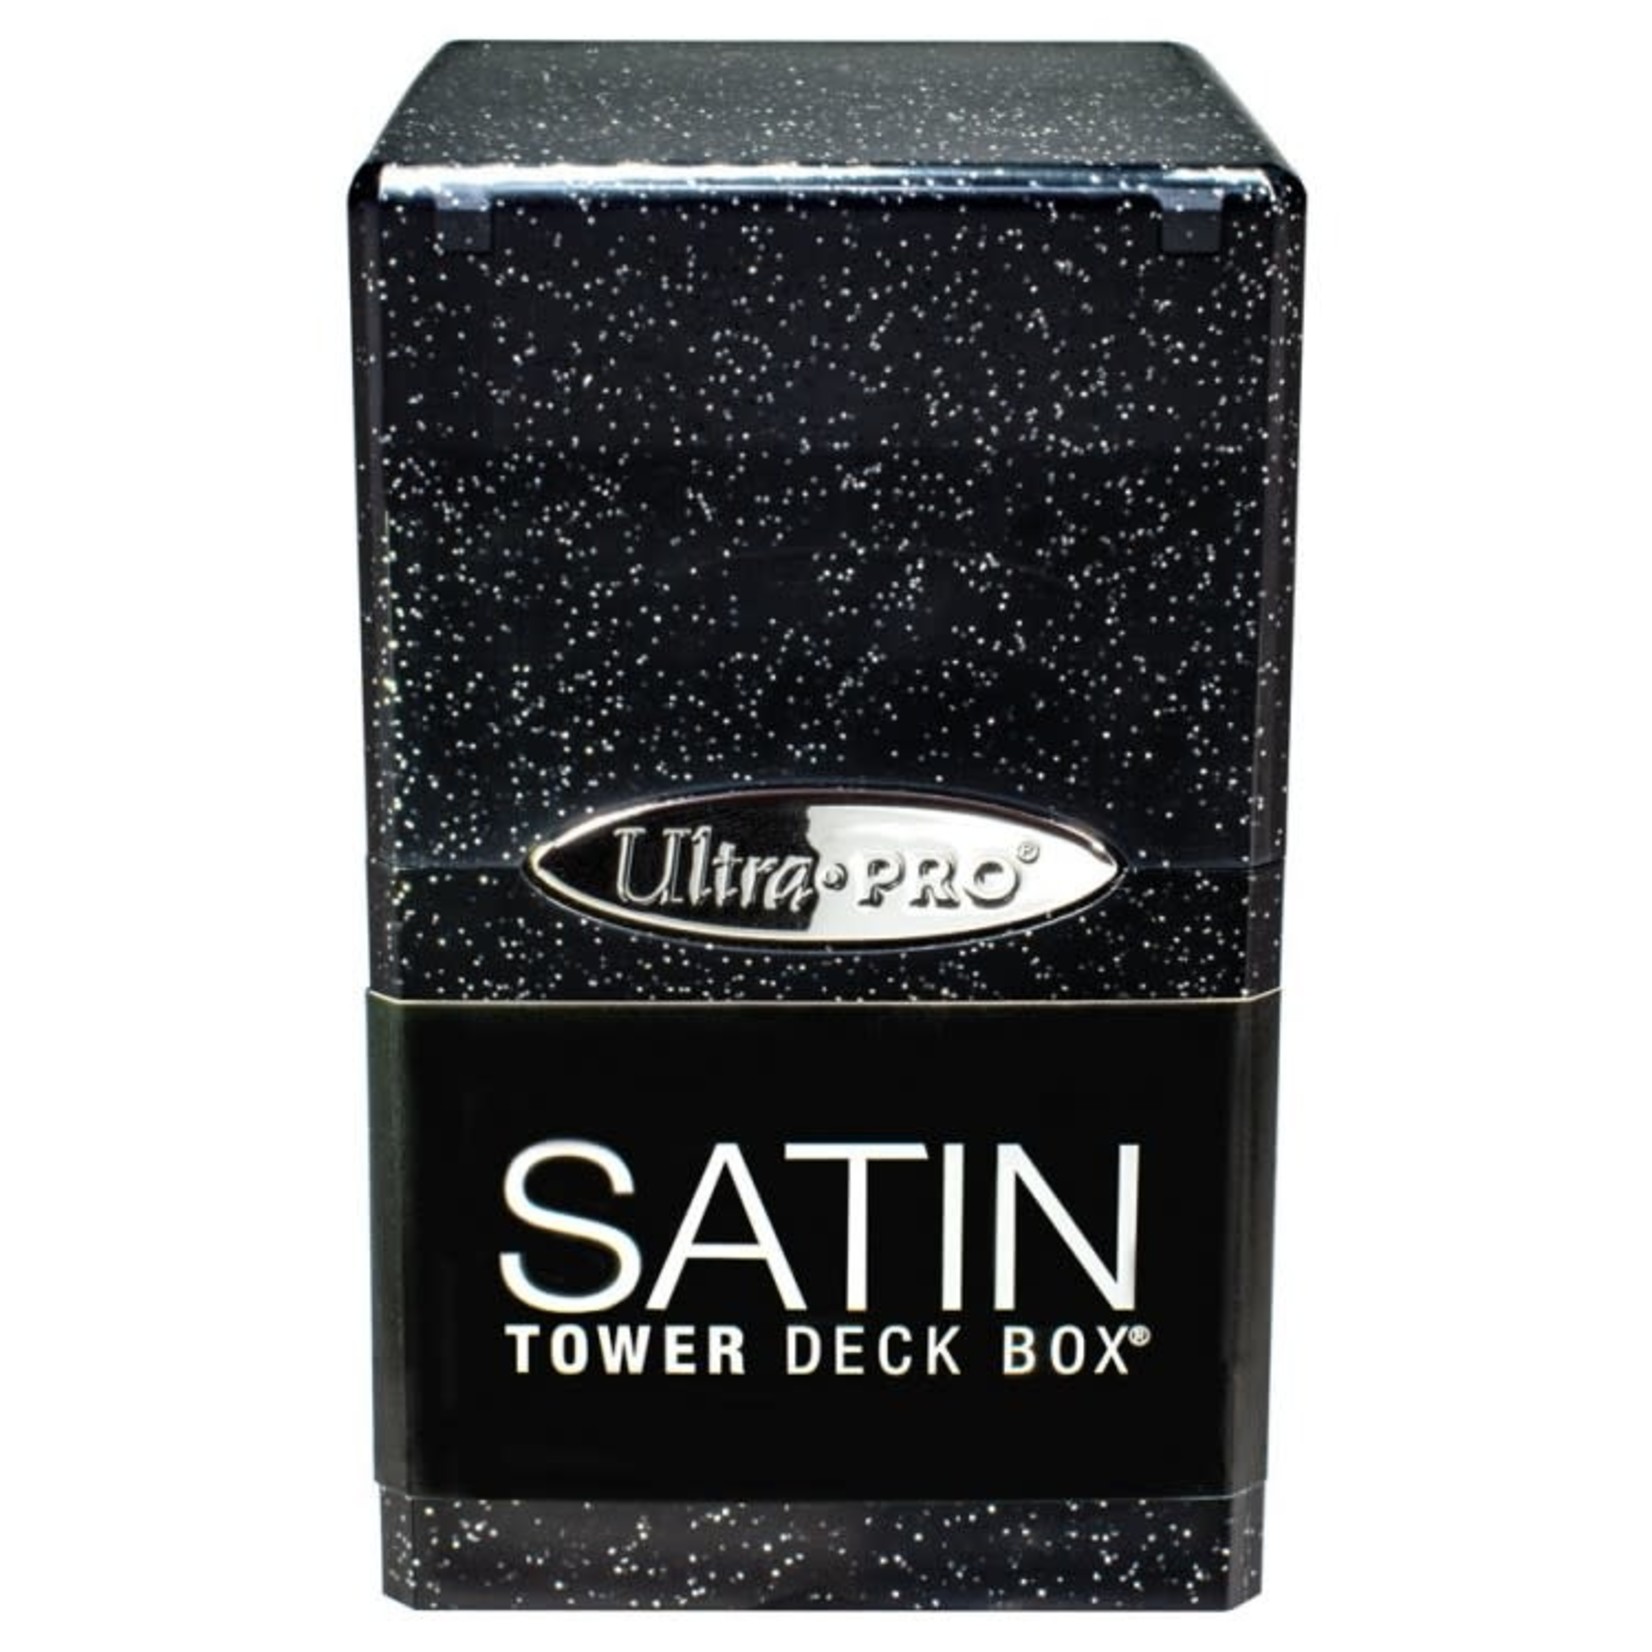 Ultra Pro Ultra Pro Satin Tower Deck Box Glitter Black